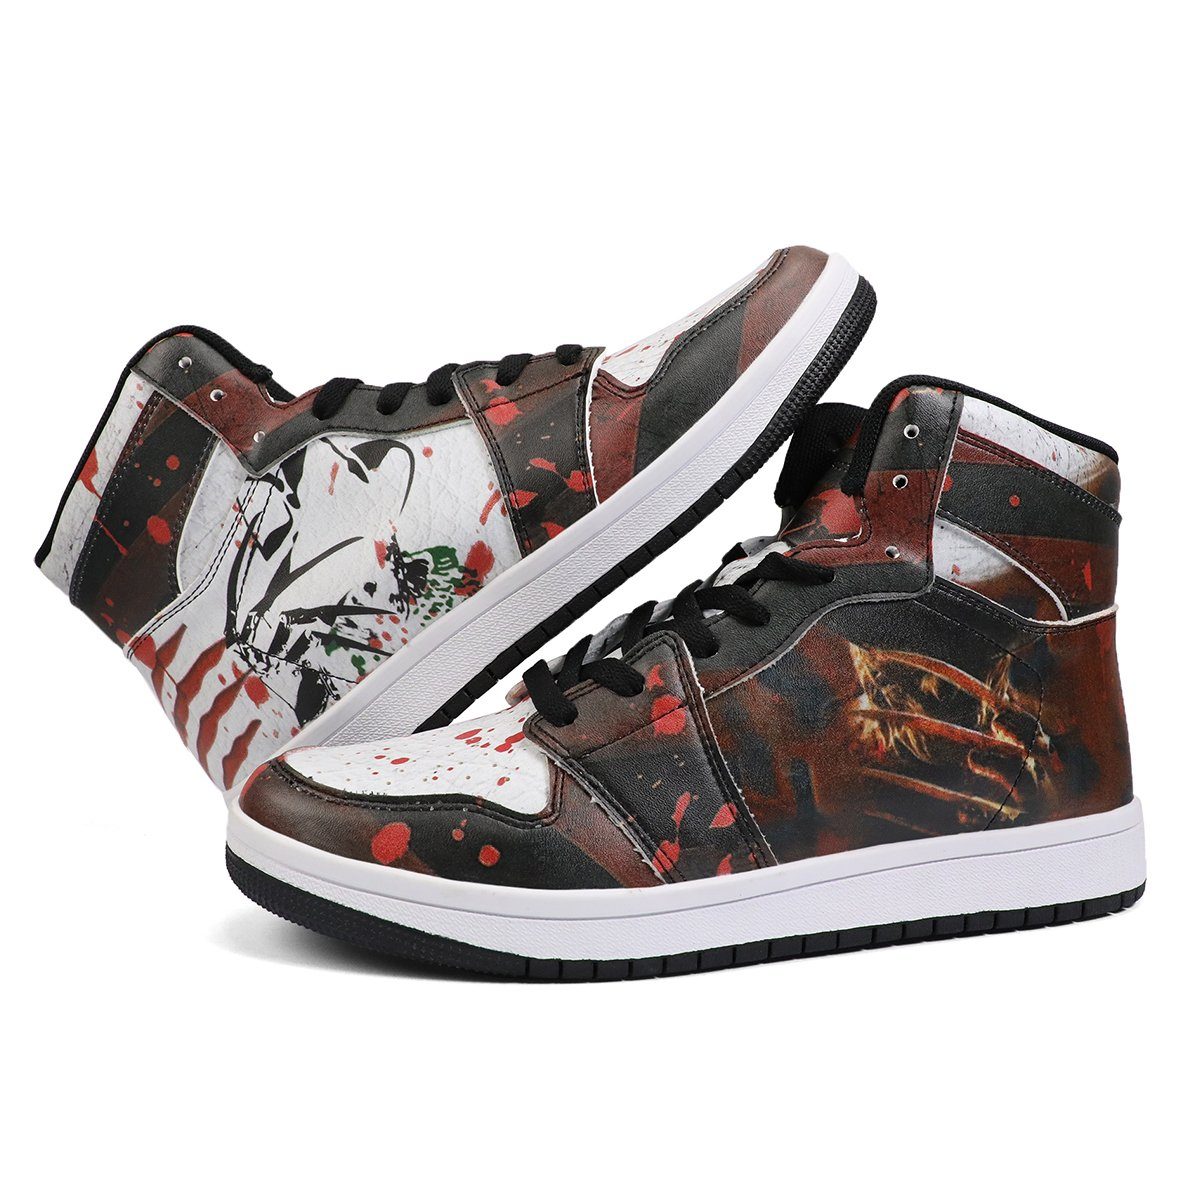 Never Sleep Again High Top Leather Sneaker Custom Jordan 1, Horror, A Nightmare On Elm Street noxfan 